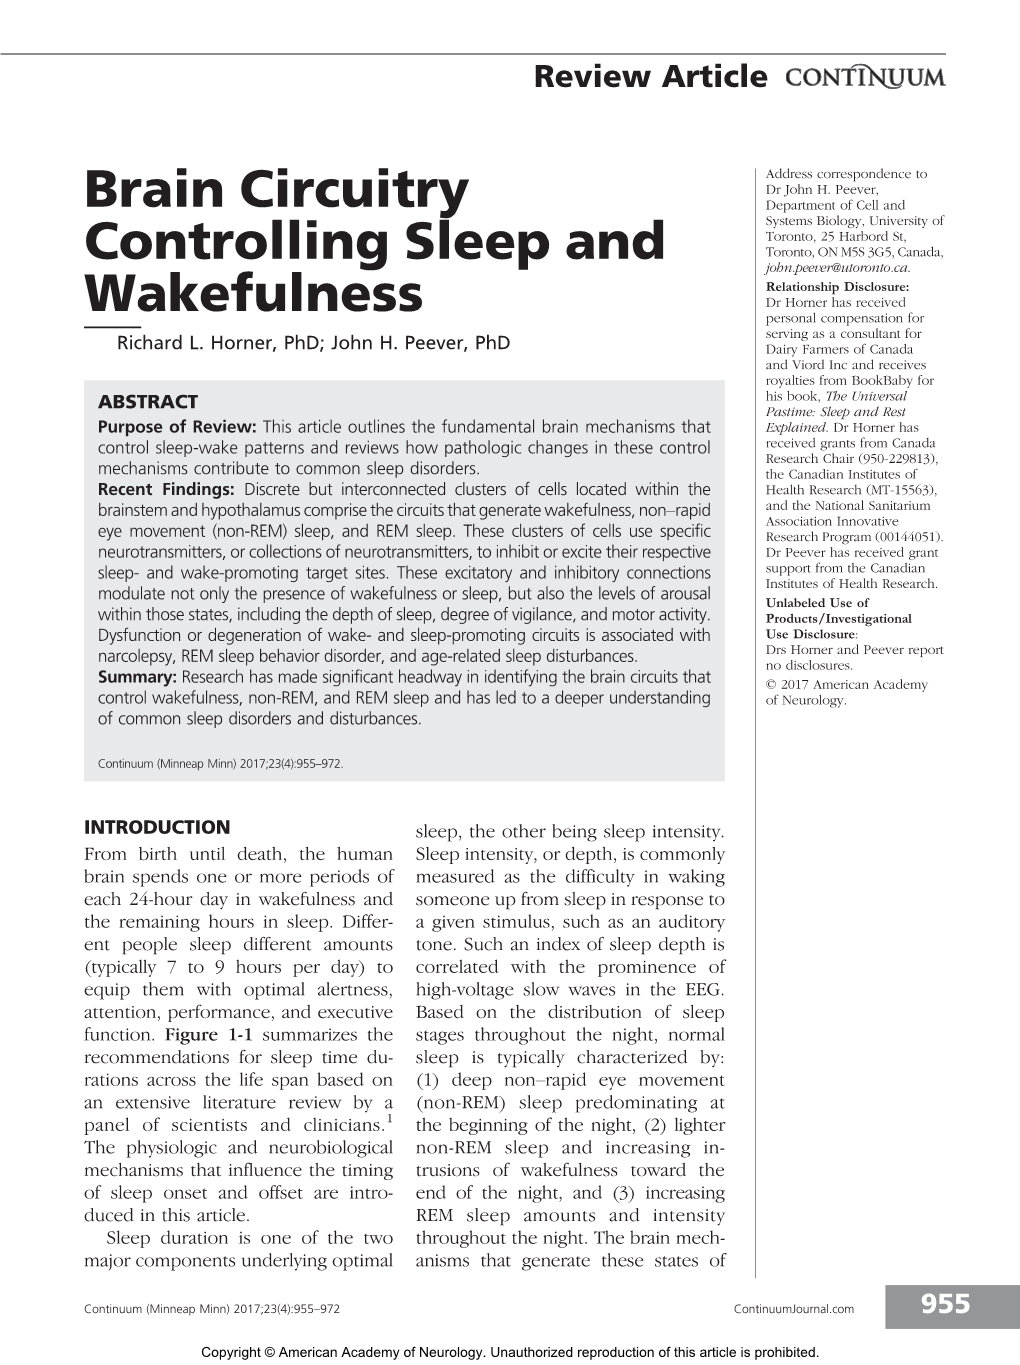 Brain Circuitry Controlling Sleep and Wakefulness